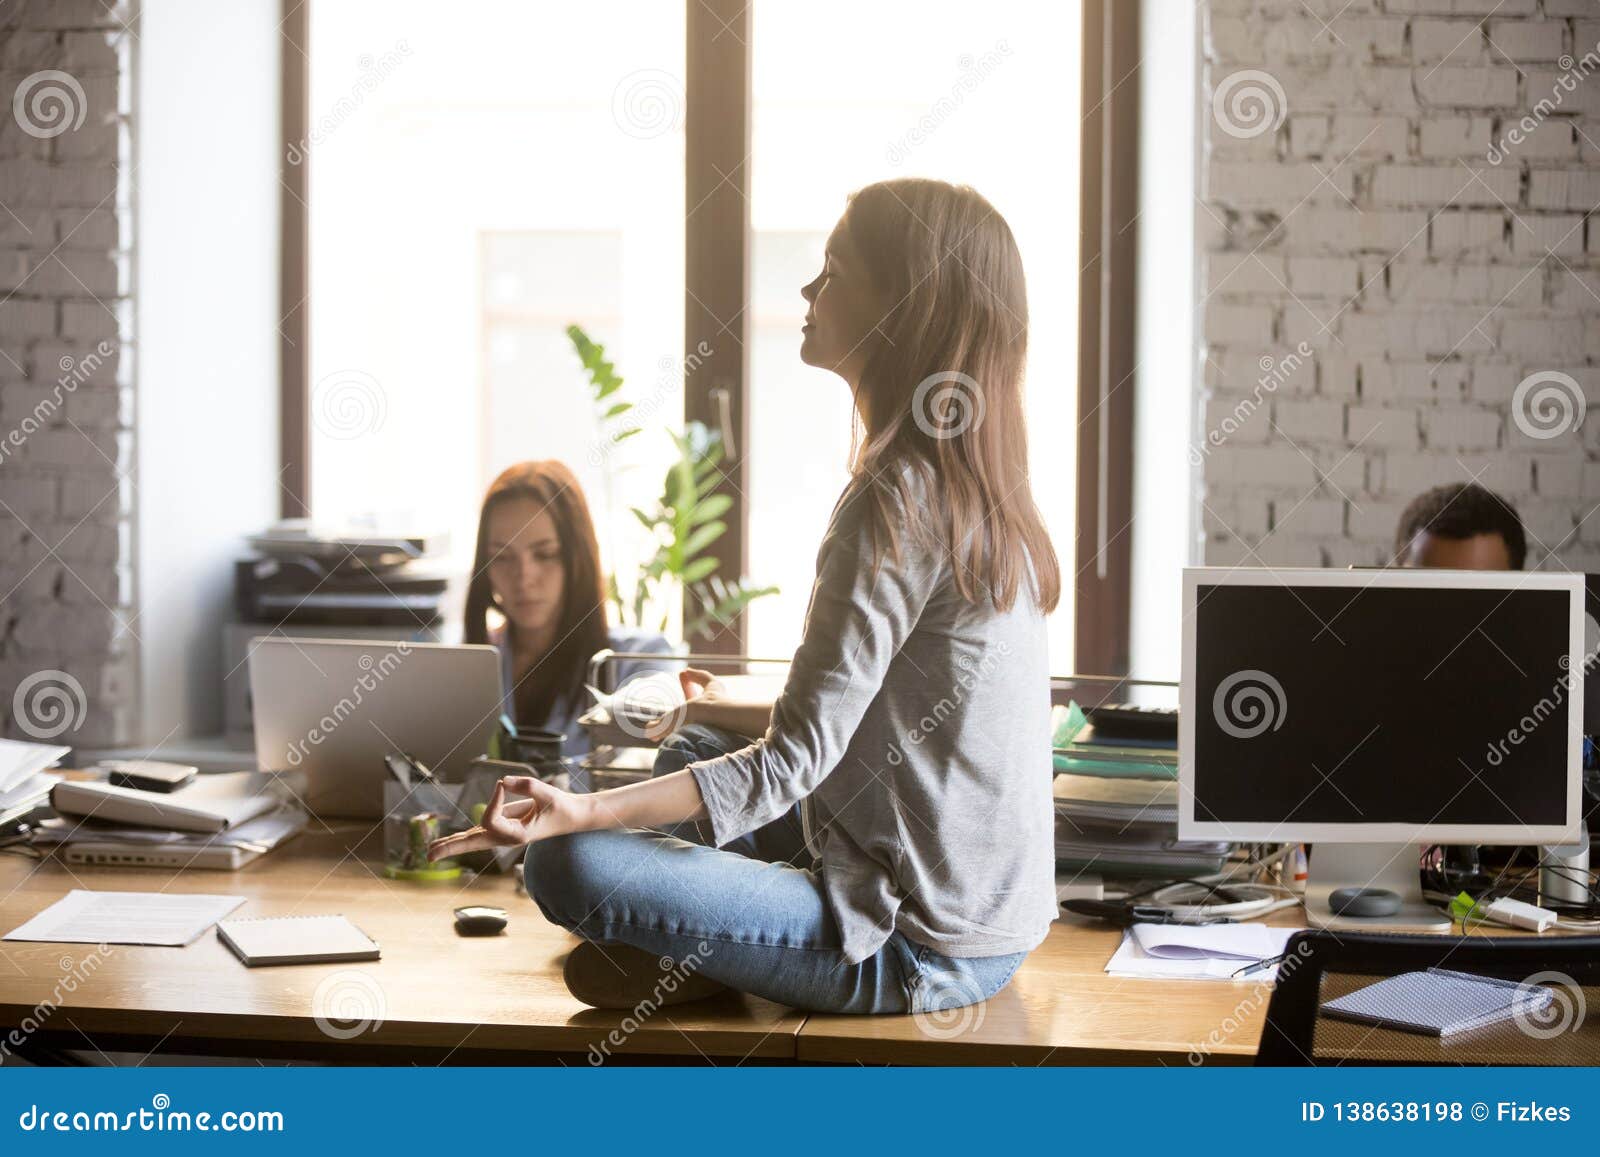 Calm Female Worker Meditating On Office Desk Stock Photo Image